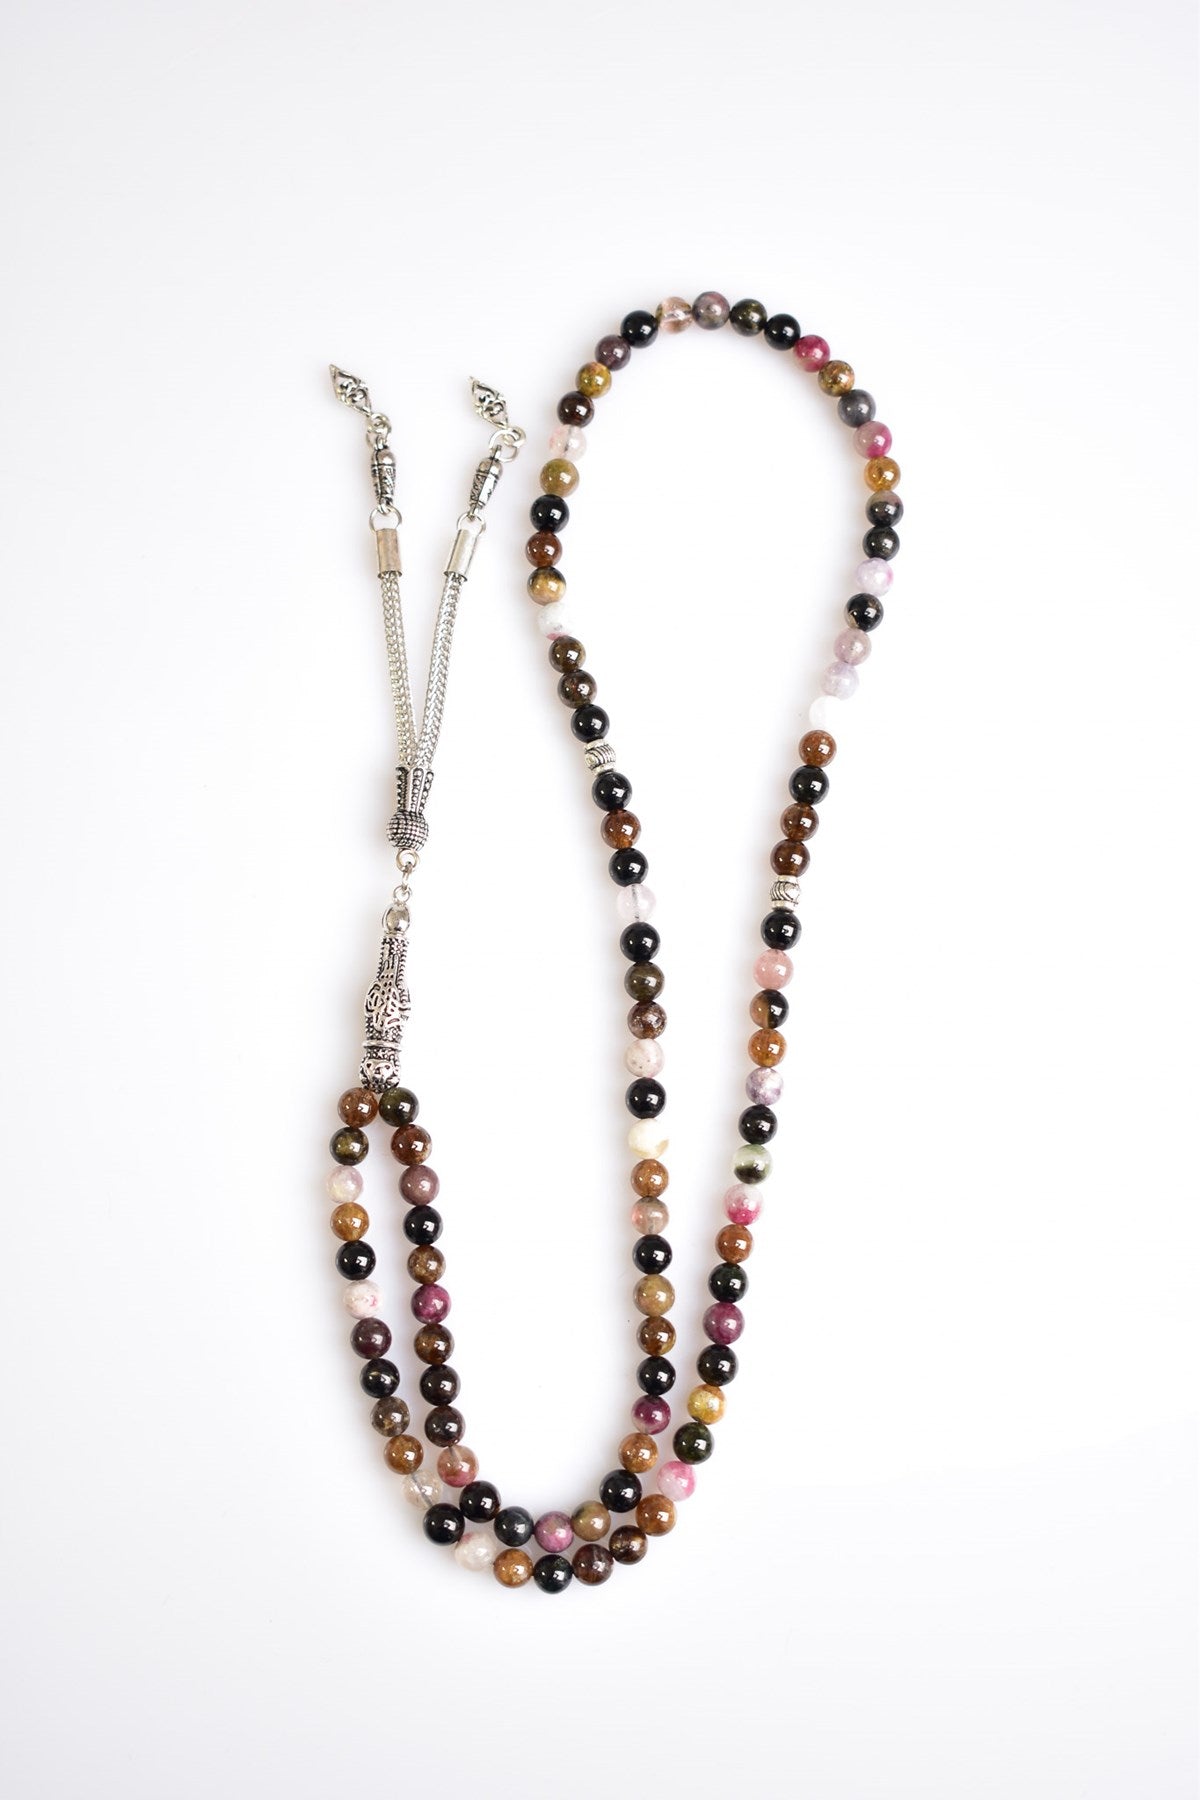 Tourmaline Gemstone Prayer Beads - 6mm / 99pc